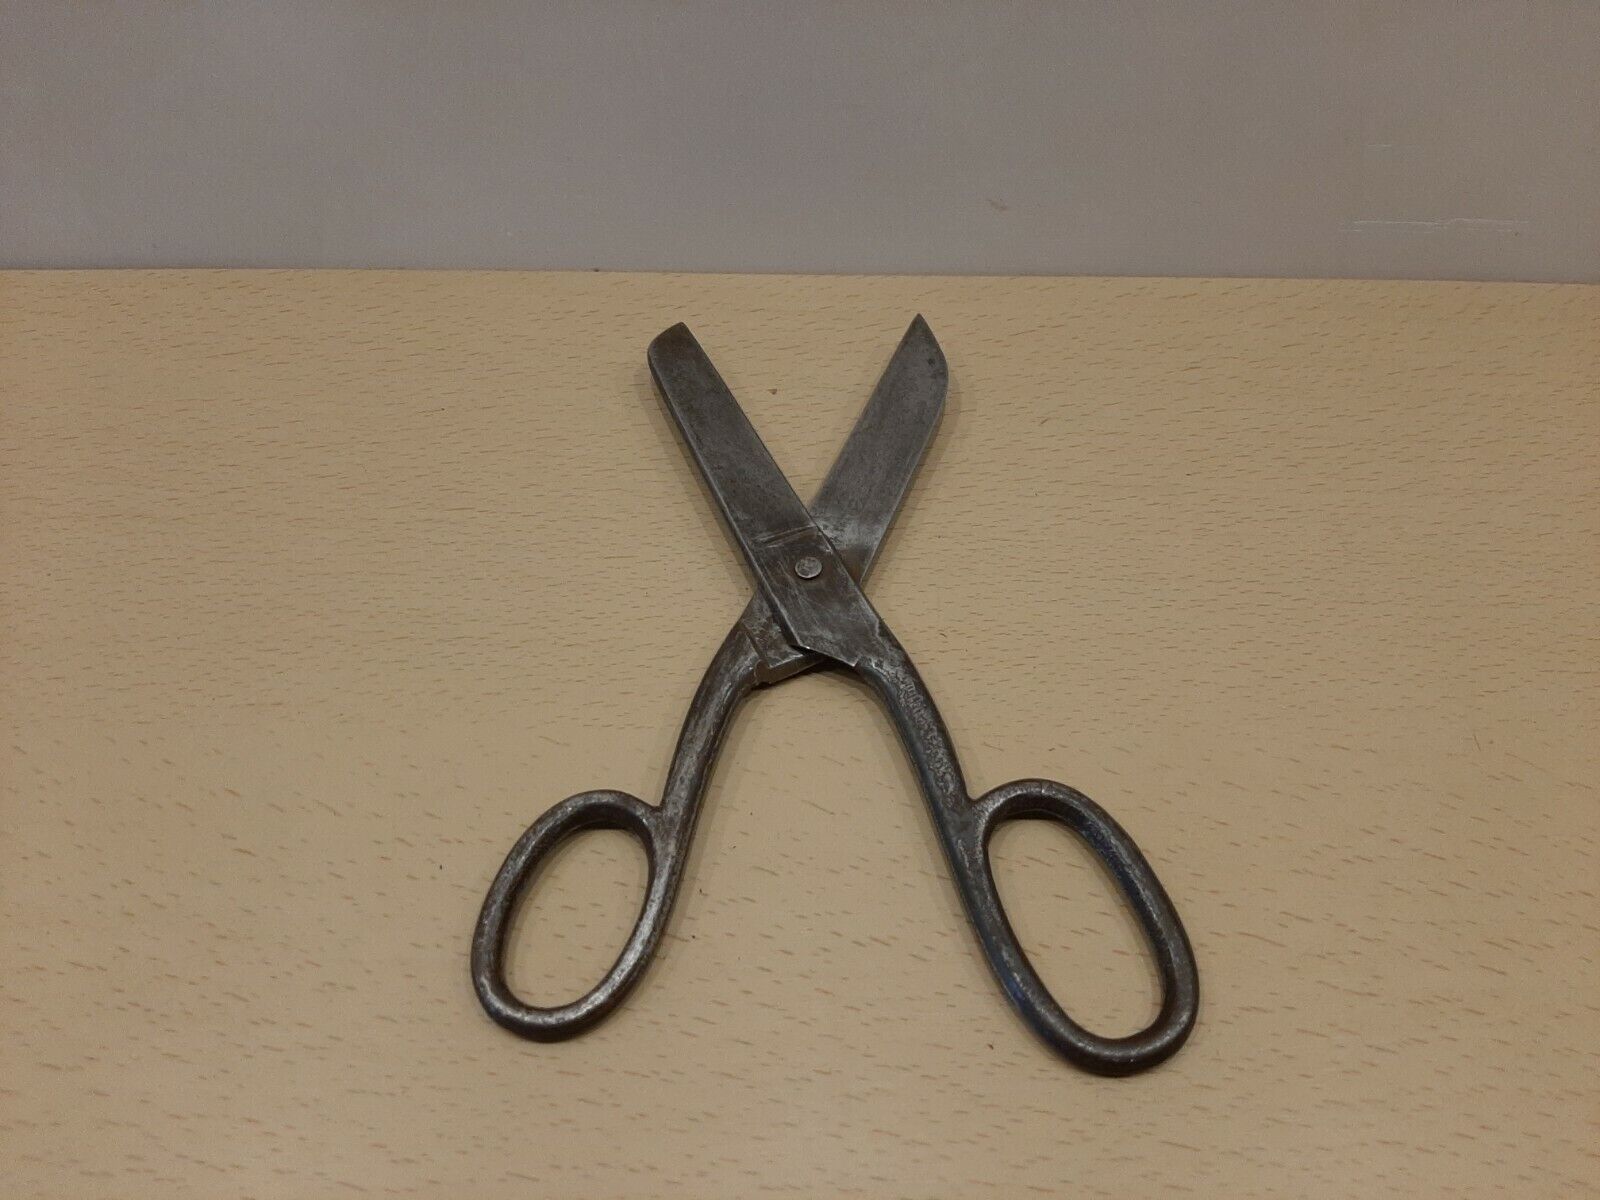 Soviet Union vintage scissors. Stigma TA 56. Original shears. Made in USSR .